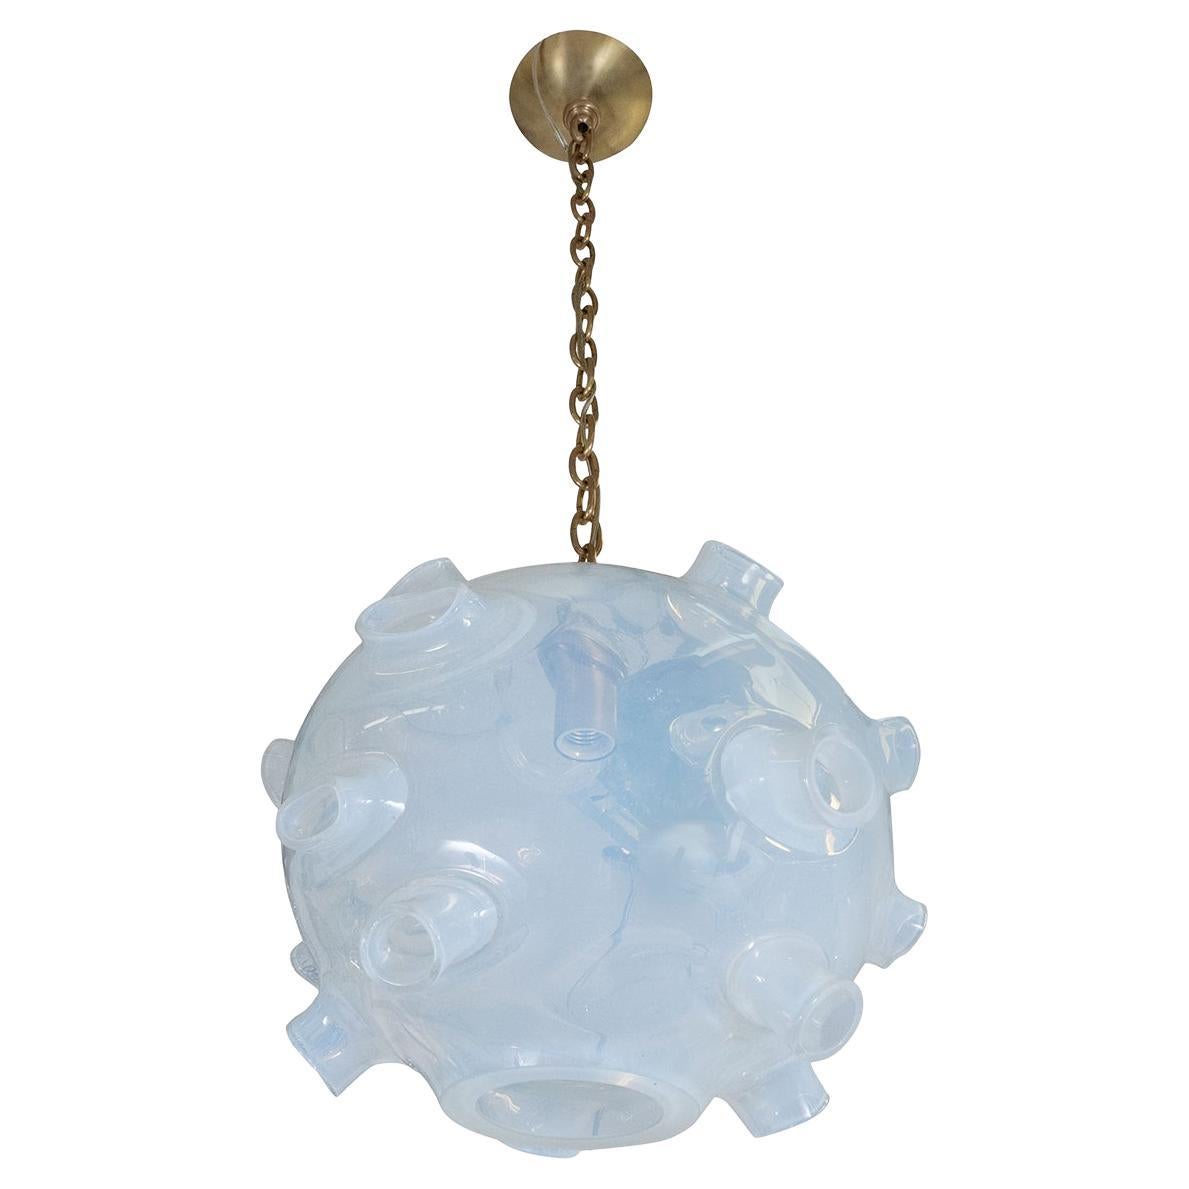 Vintage Biomorphic Handblown Opaline Art Glass Pendant, "Caldera" For Sale